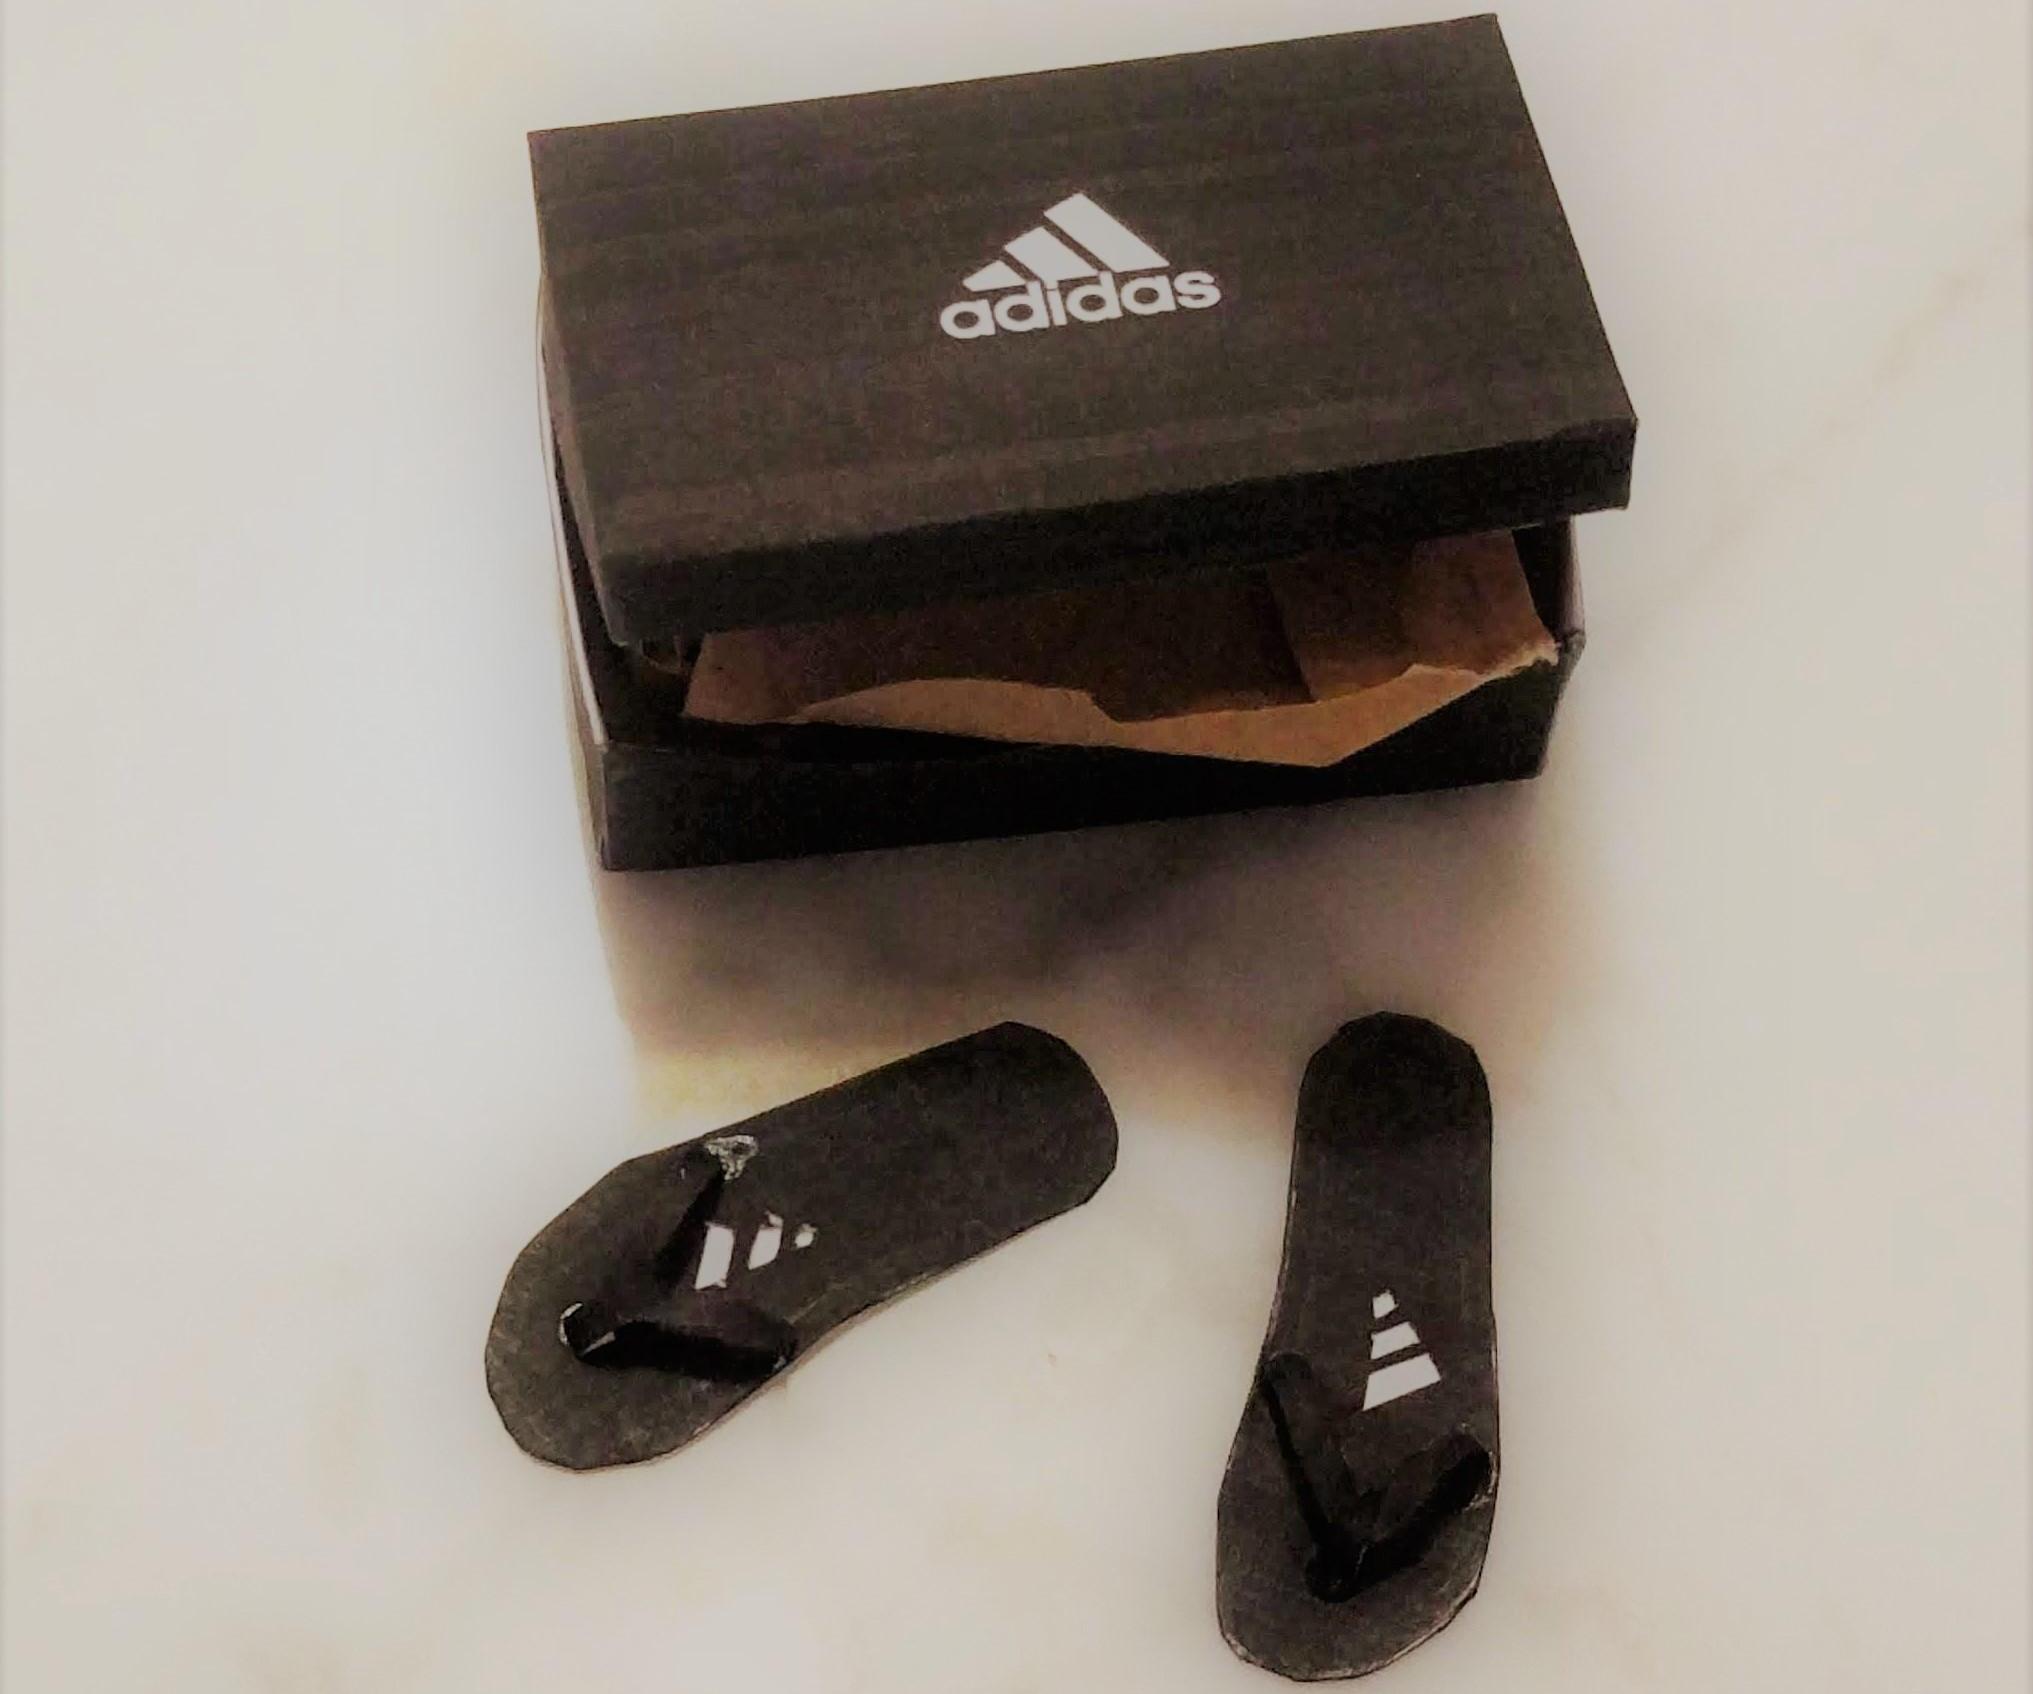 Miniature Shoebox and Shoes